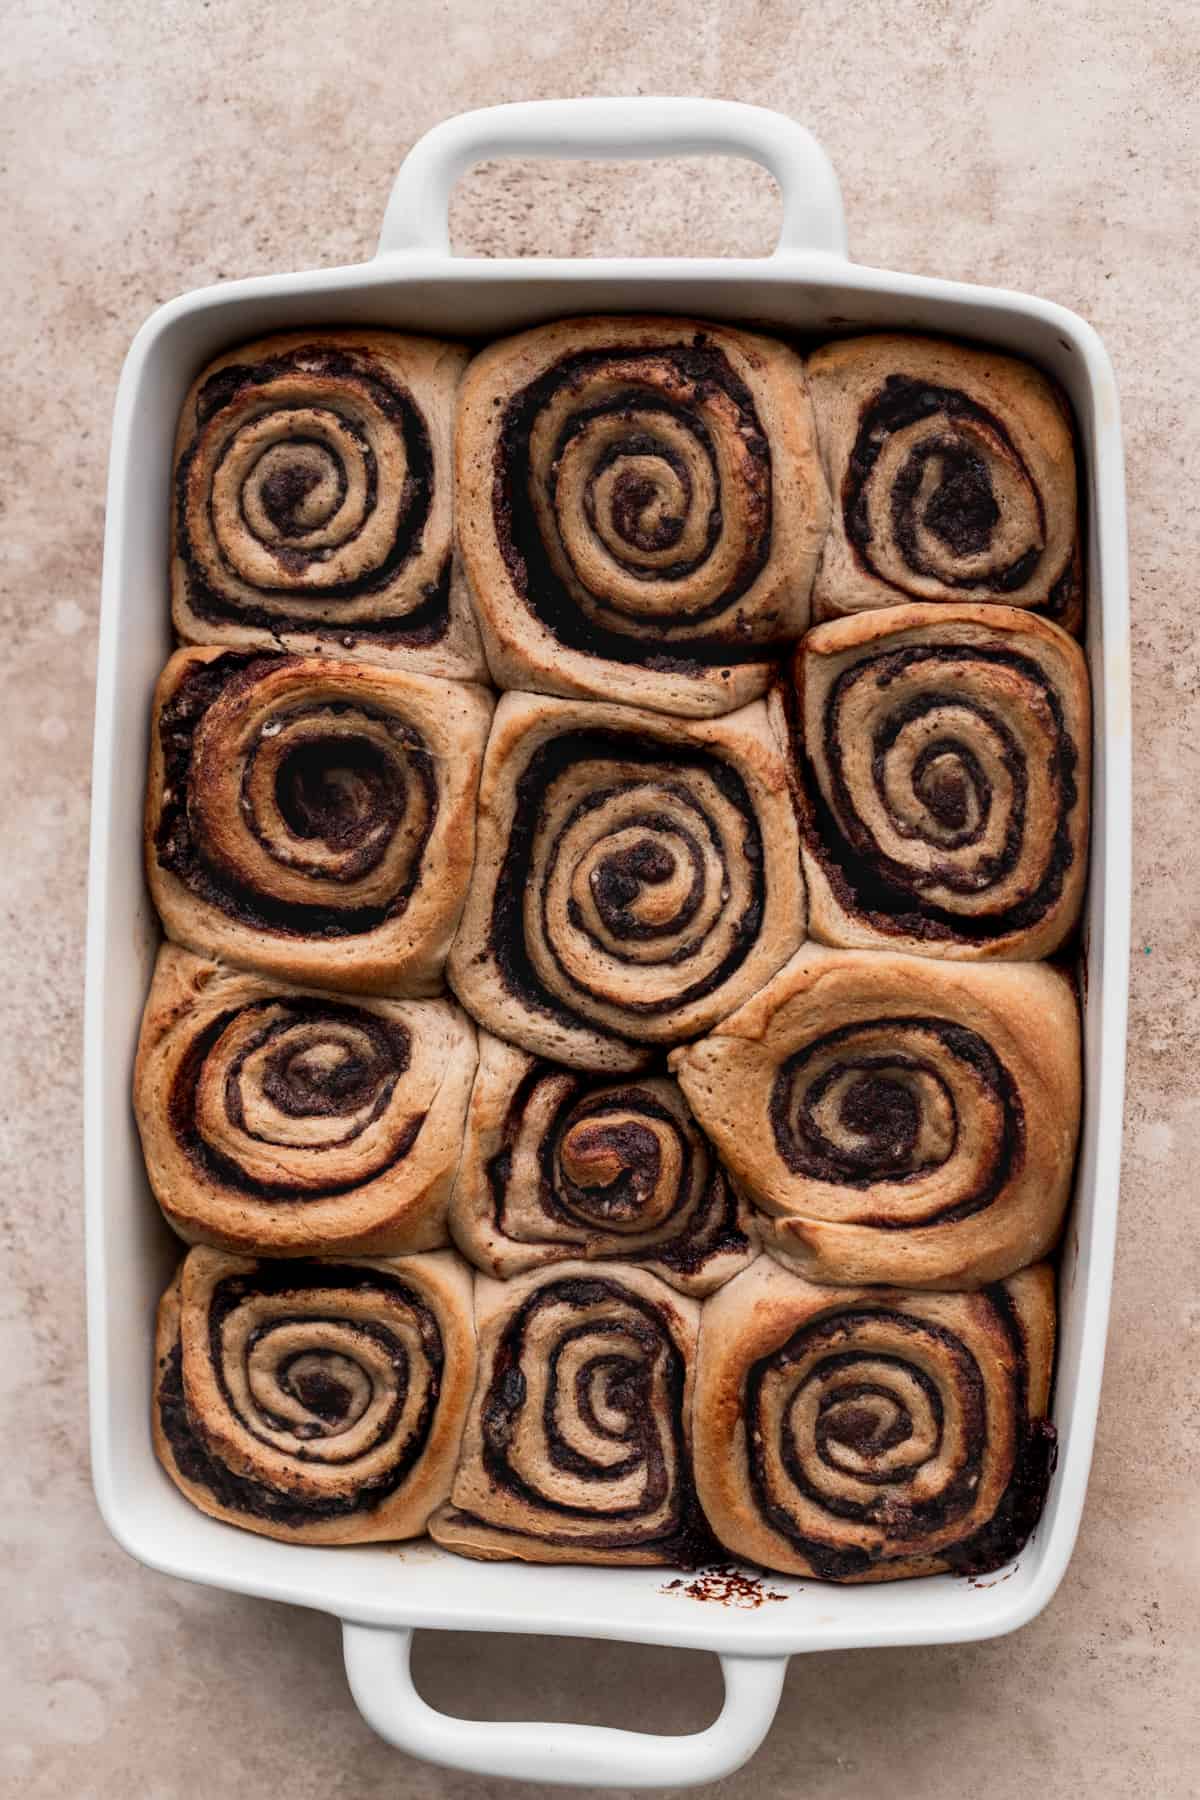 Baked rolls in the platter.